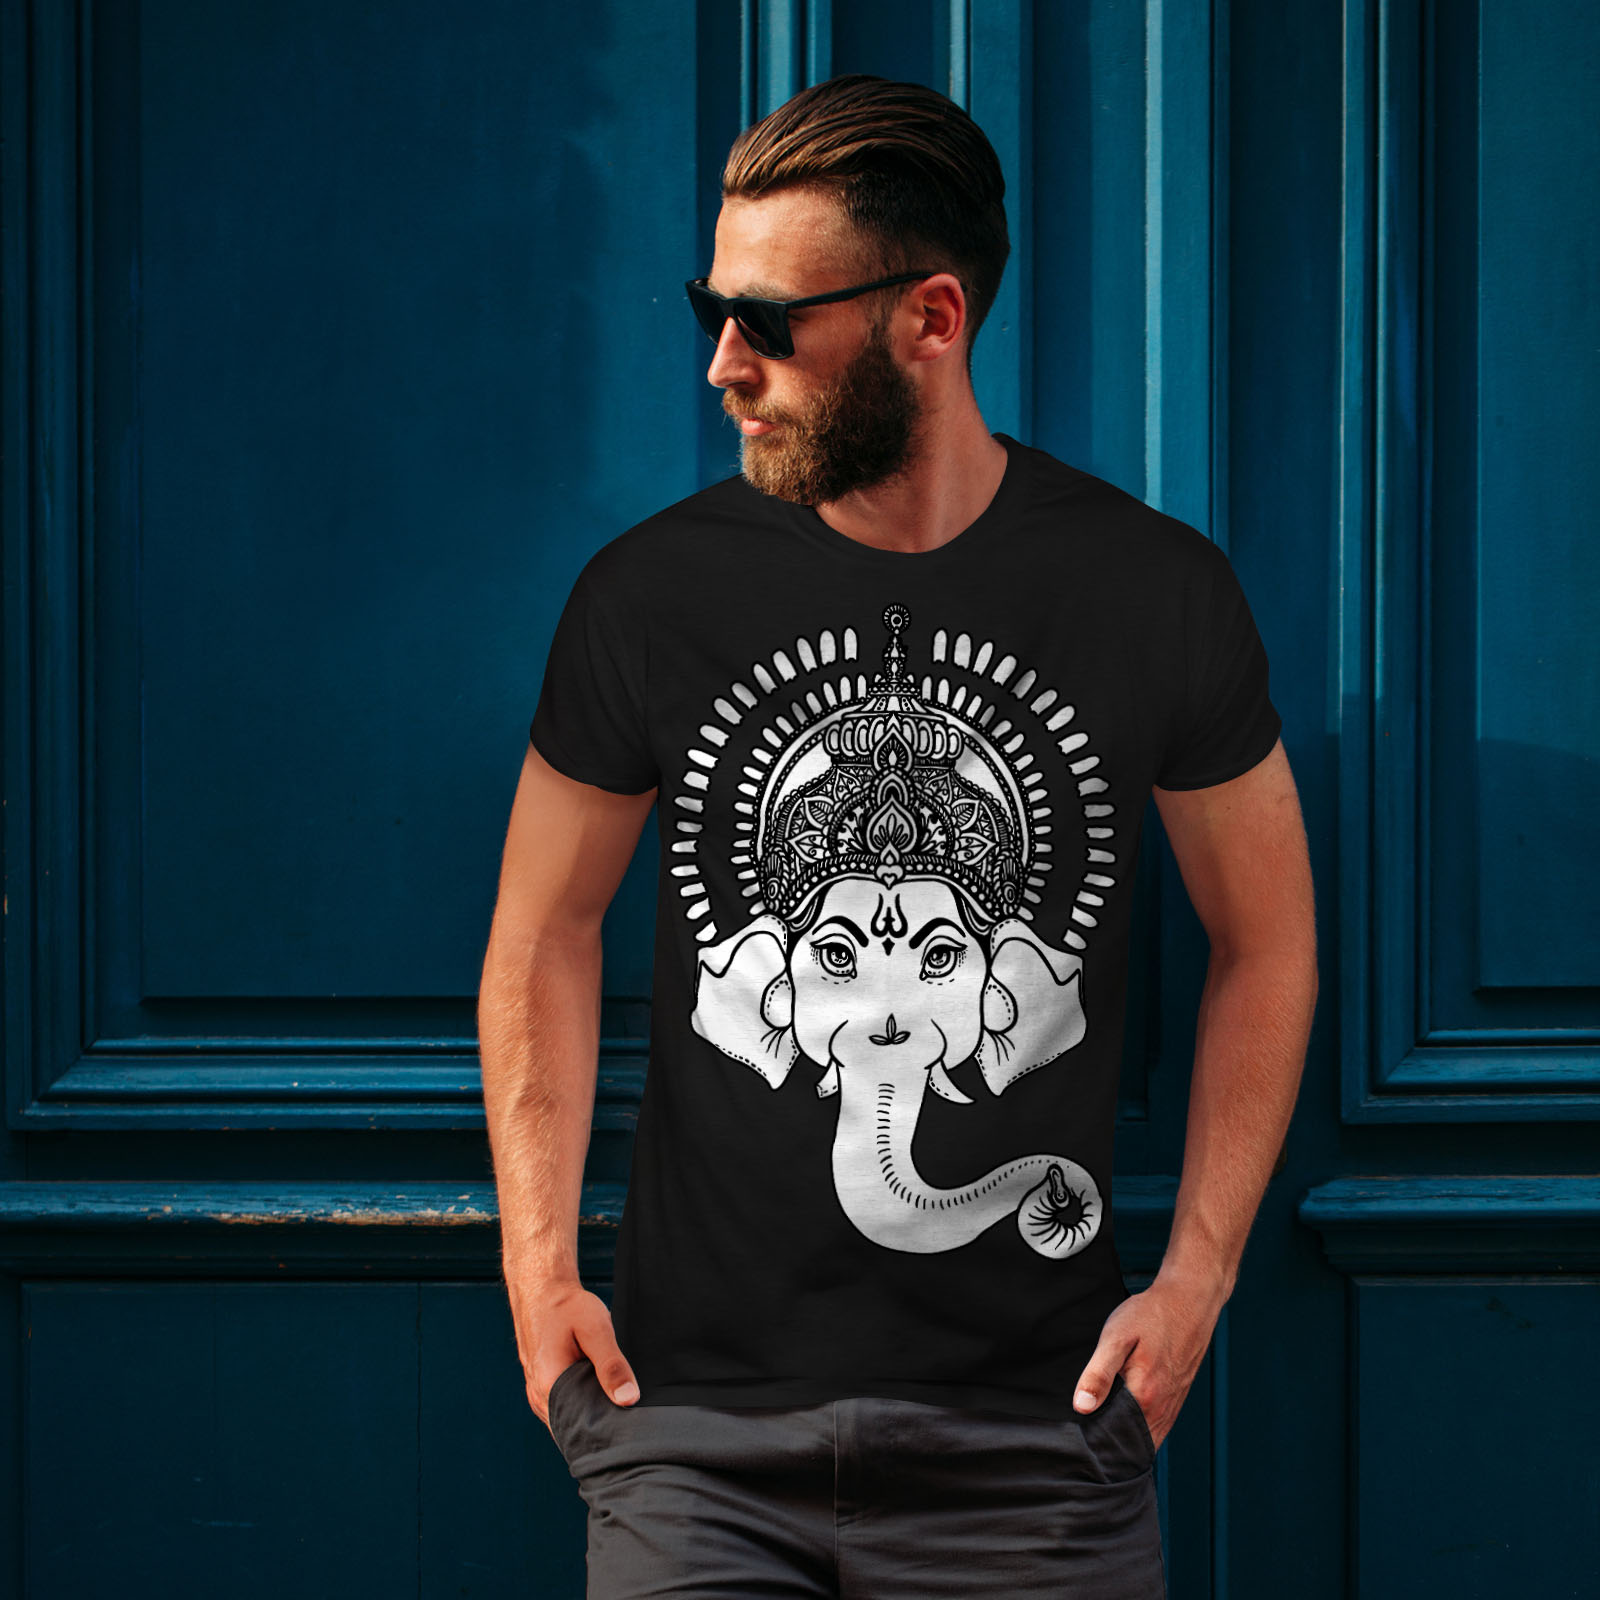 hindú Camiseta Impresa Diseño Gráfico Arte indio wellcoda Ganesha para hombre Camiseta